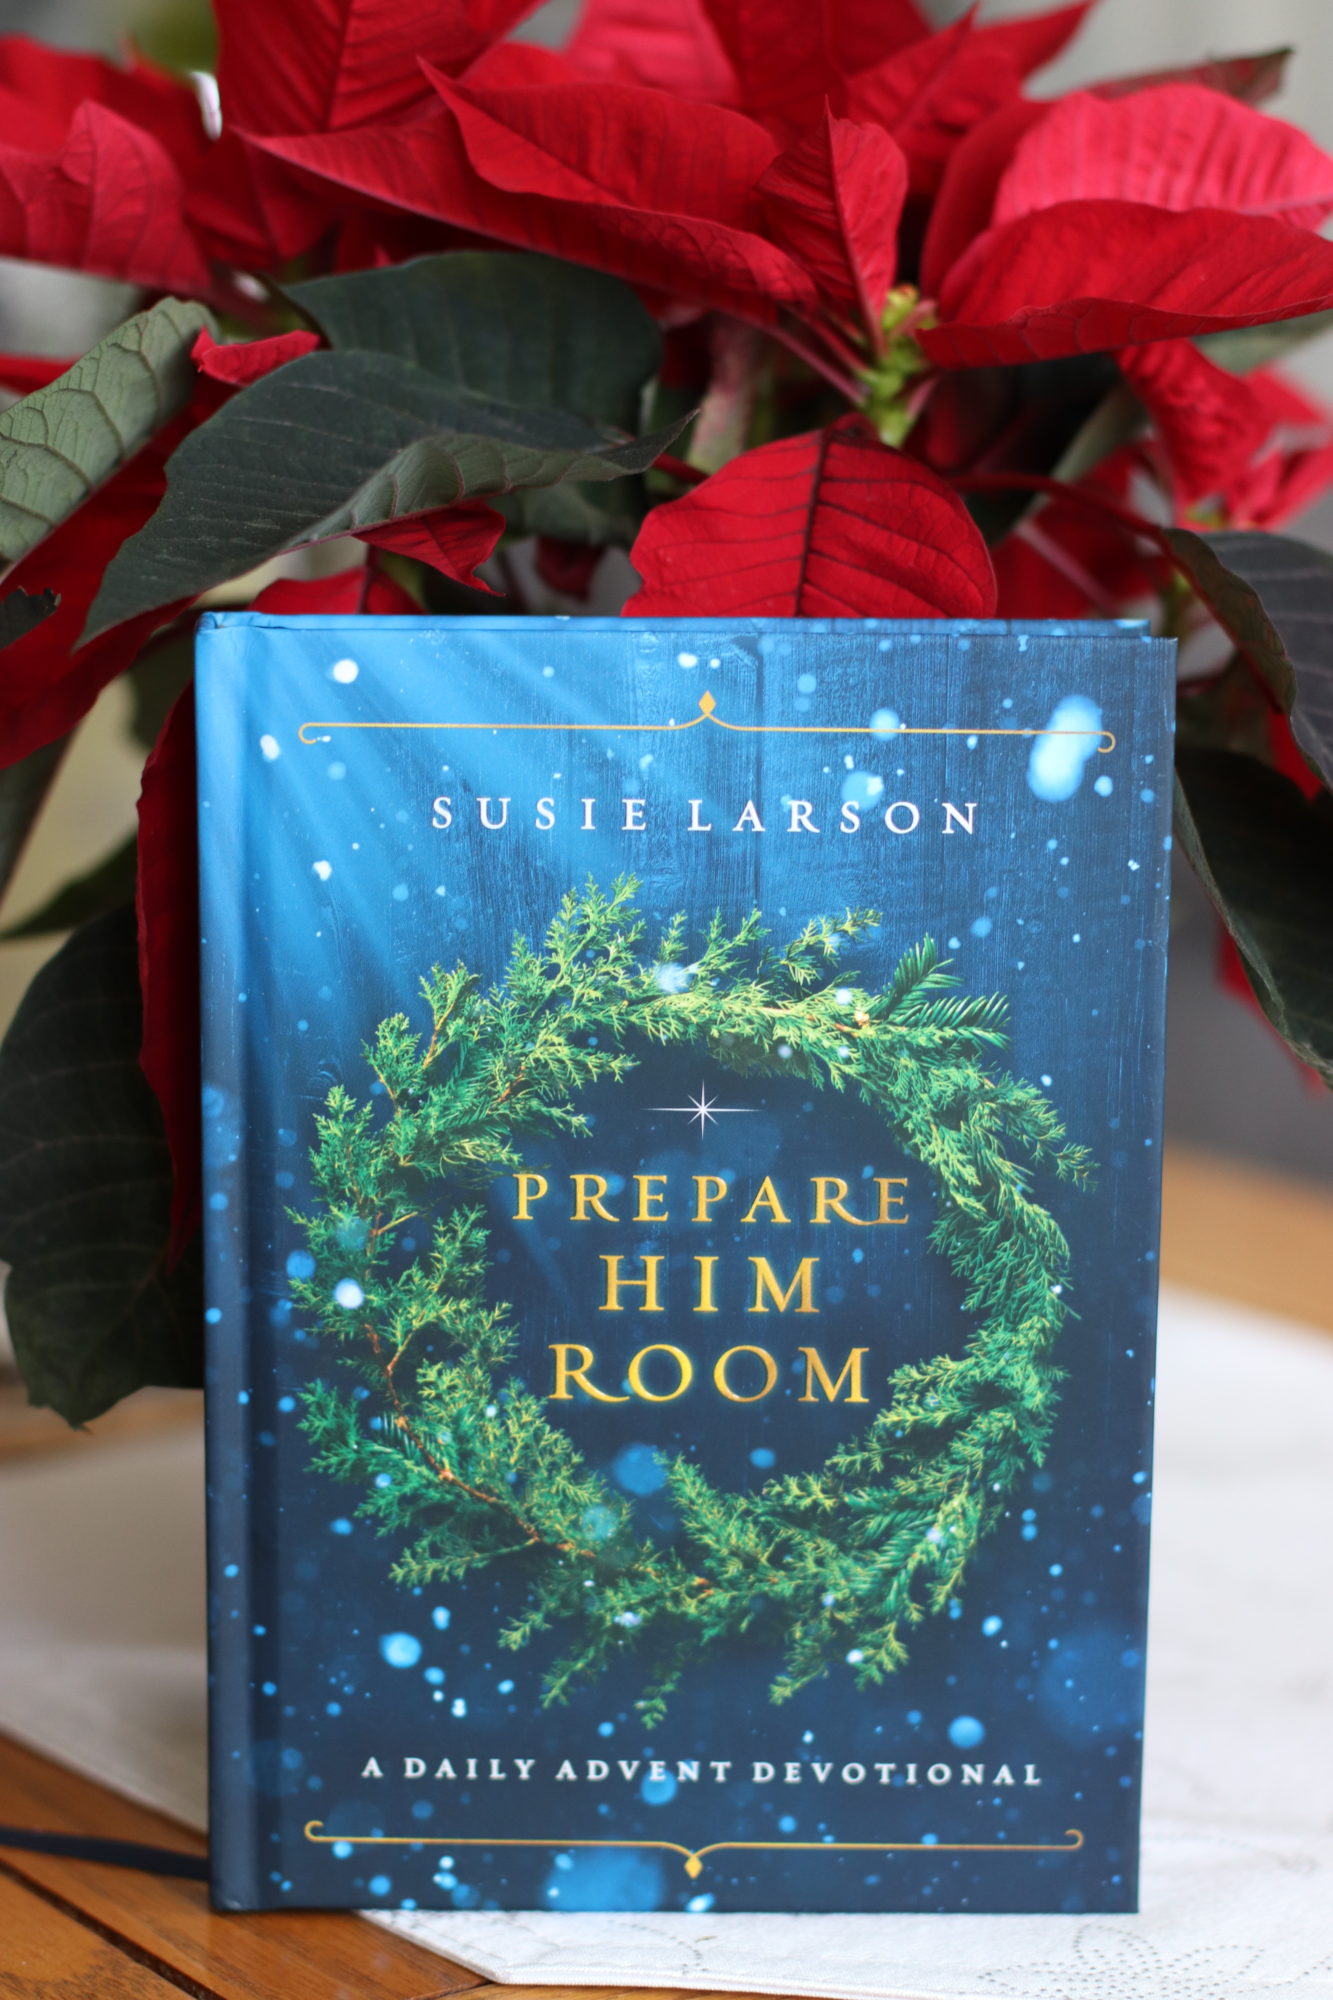 Prepare Him Room by Susie Larson